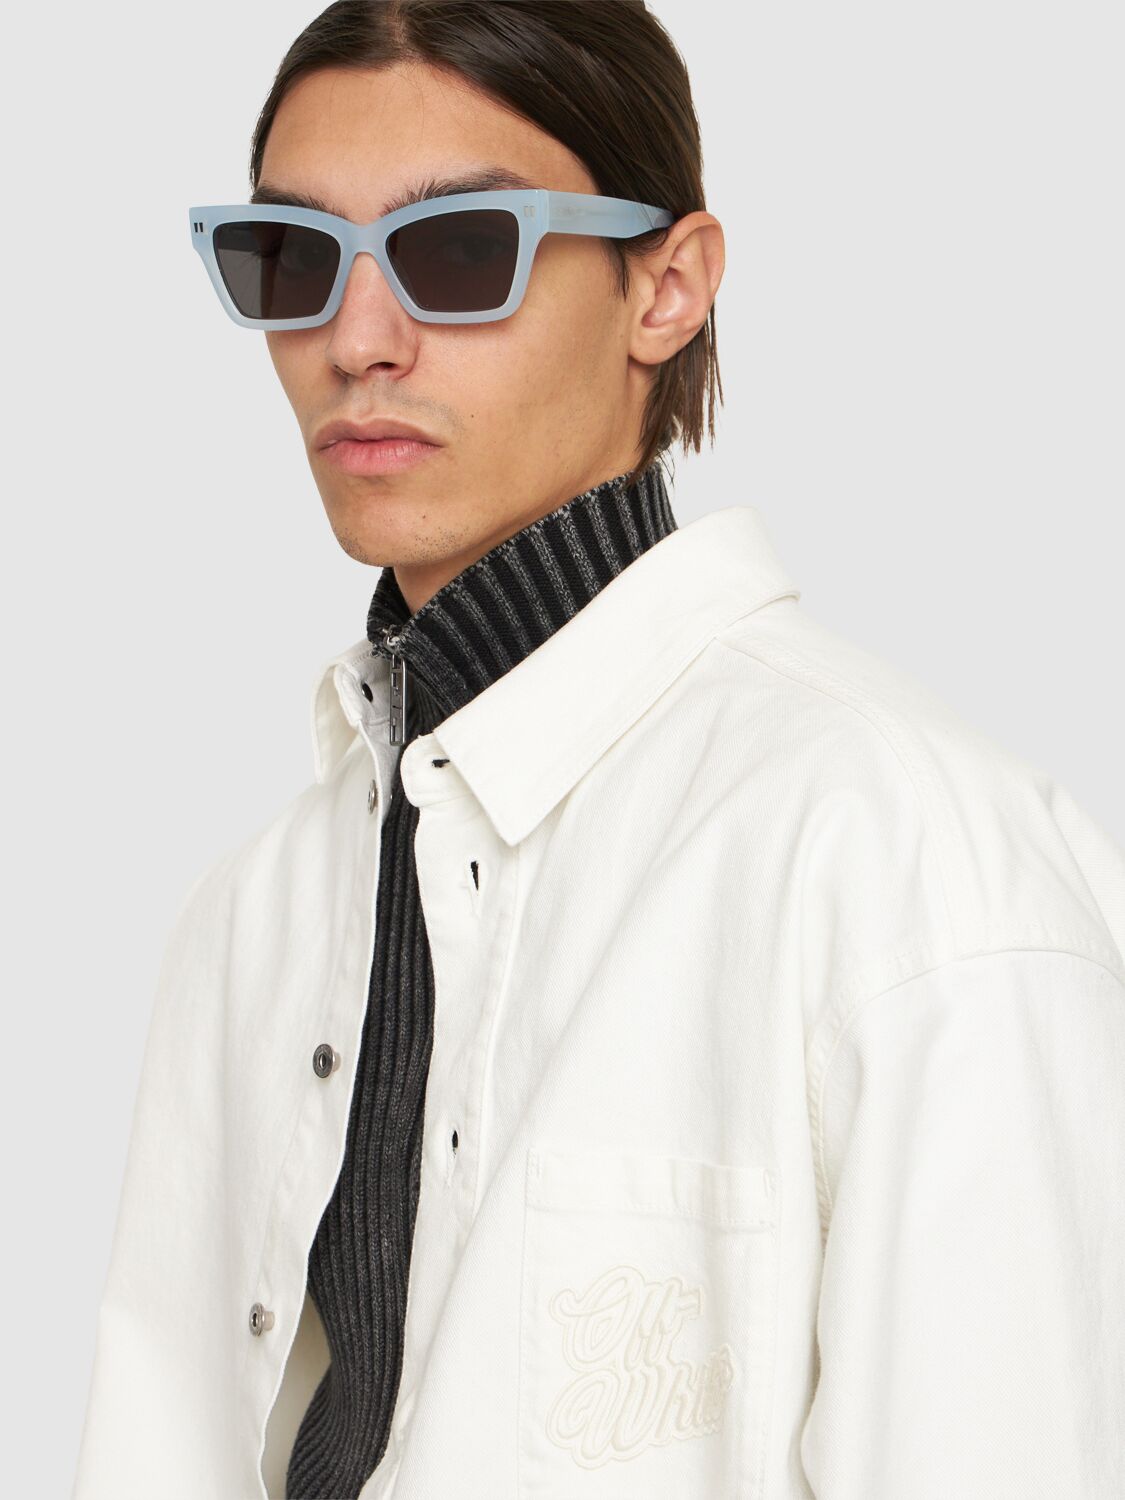 Shop Off-white Cincinnati Acetate Sunglasses In Light Blue